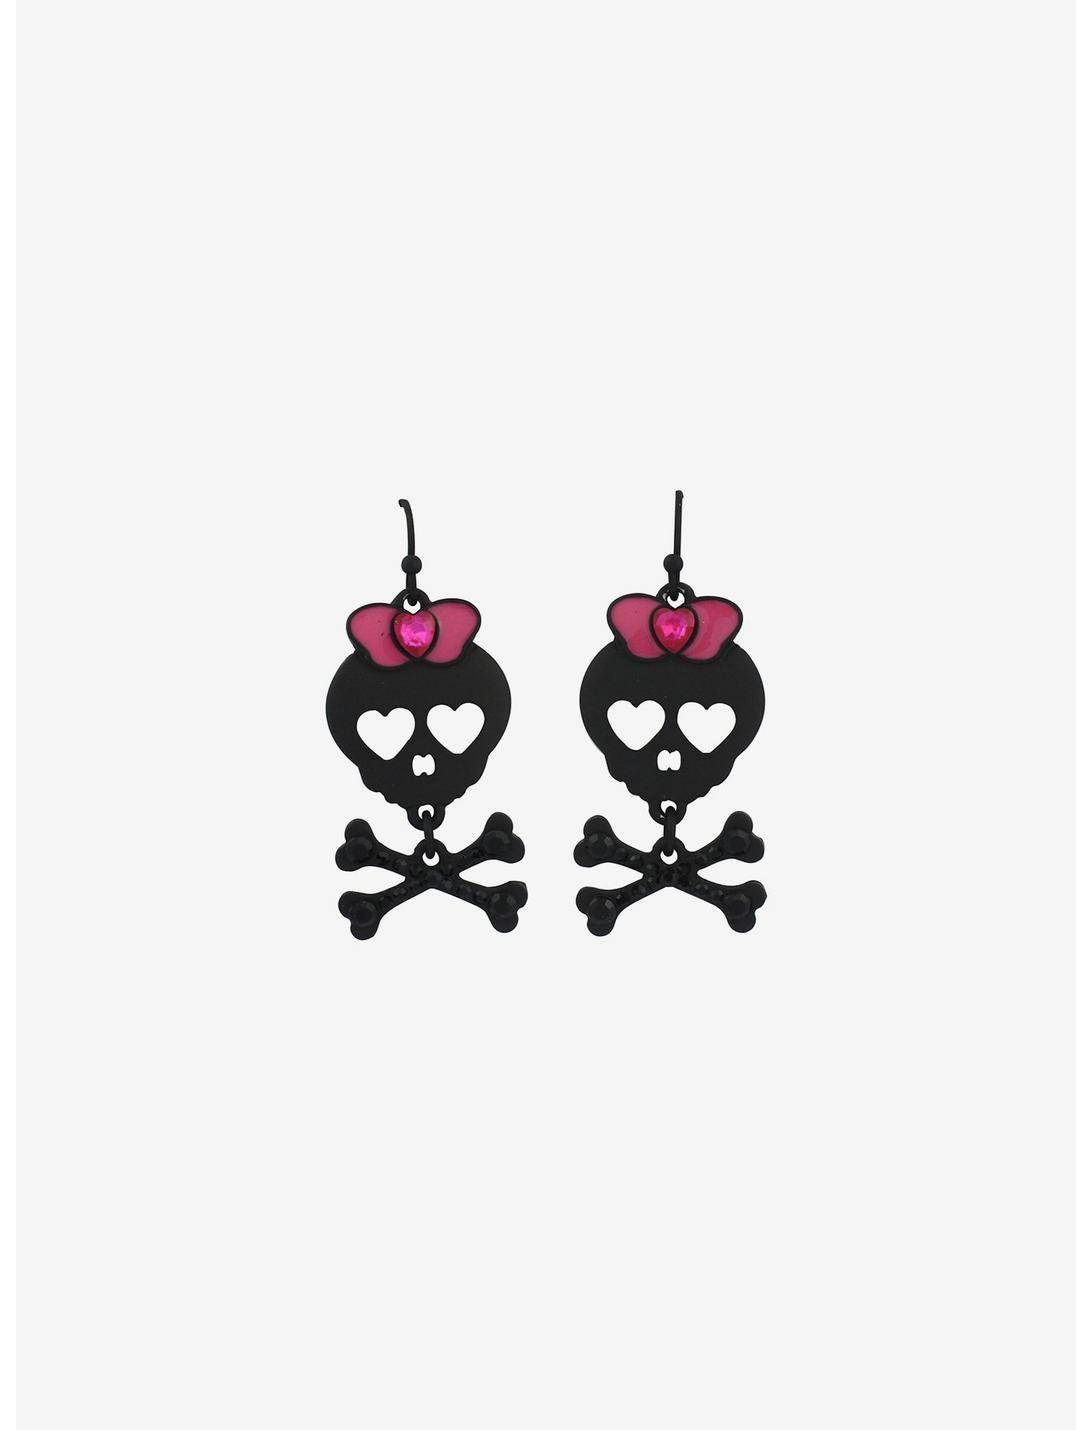 Black & Pink Skull & Crossbones Drop Earrings, , hi-res